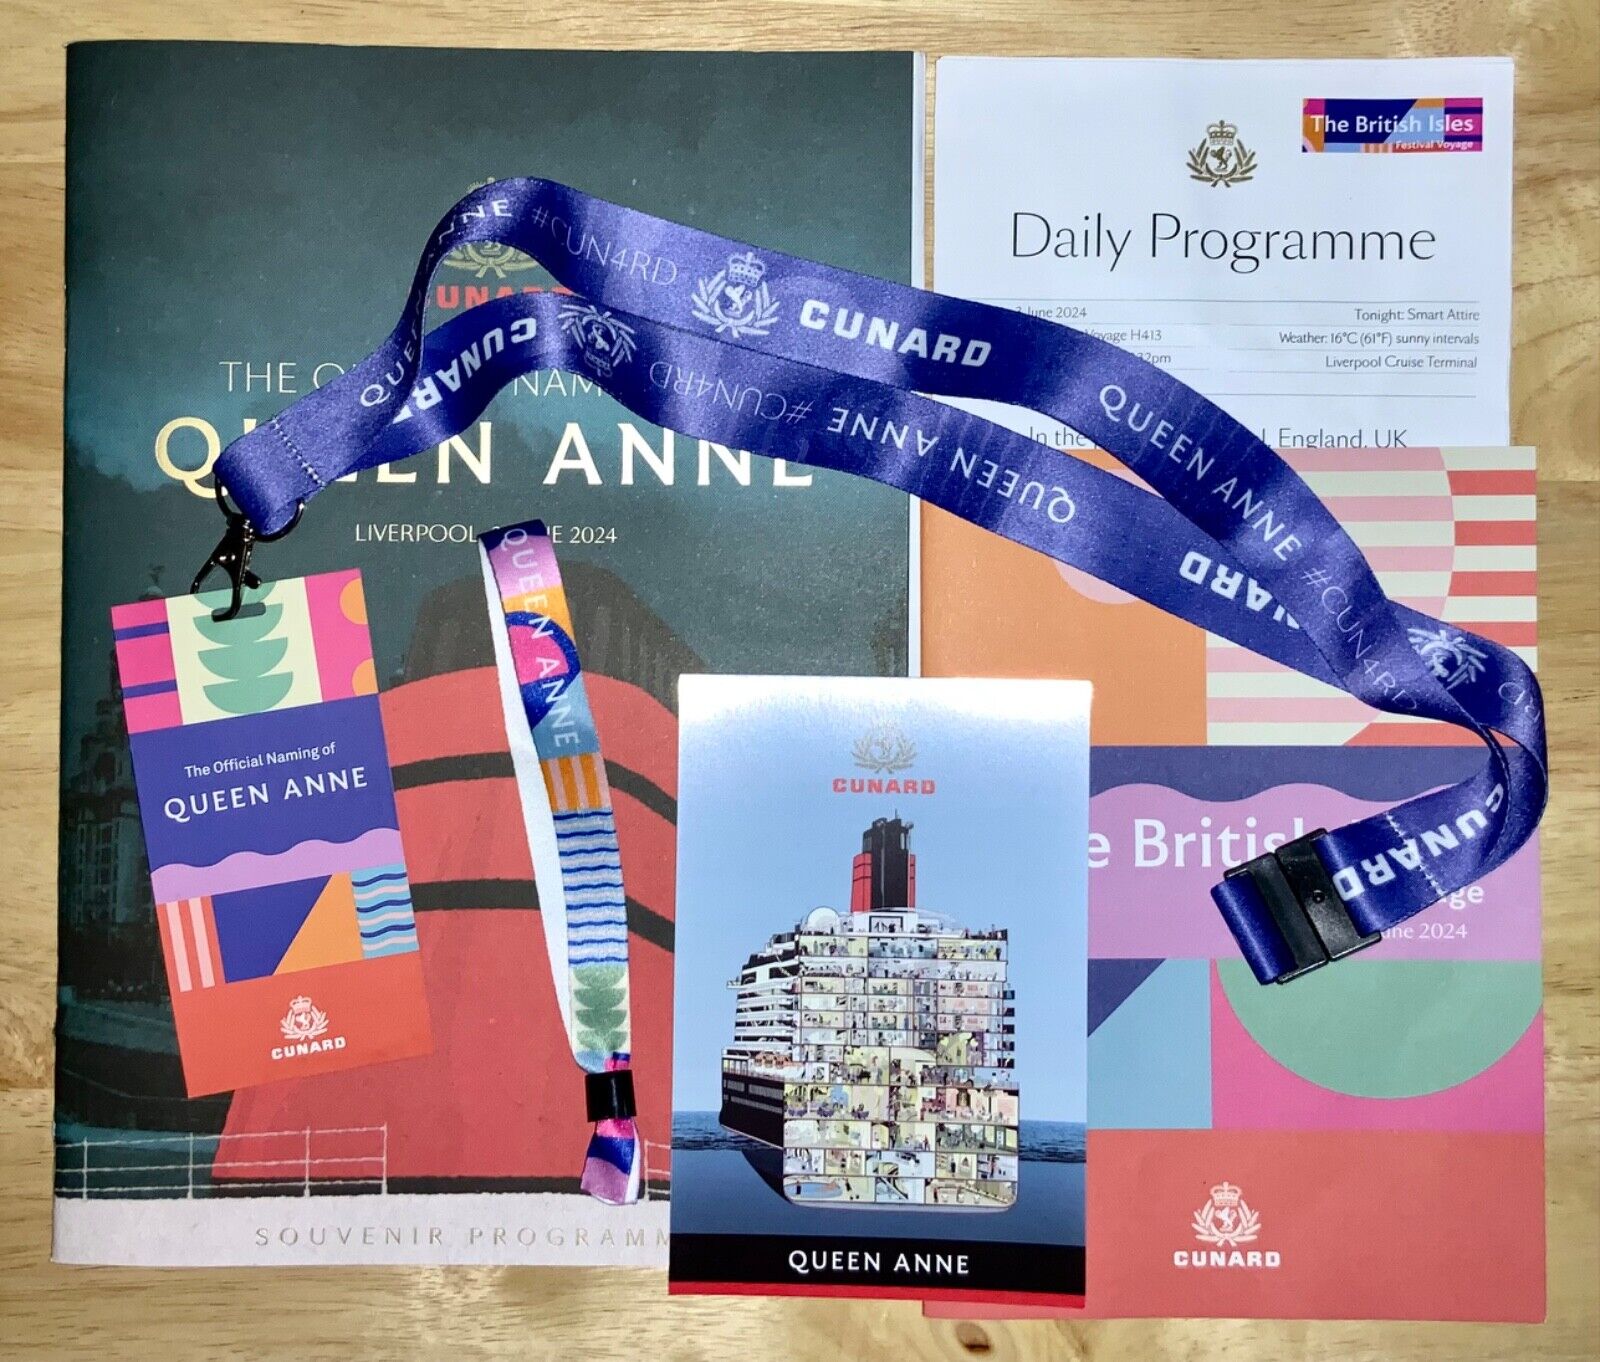 Lot Cunard Queen Anne Official Naming ceremony Postcard program lanyard bracelet